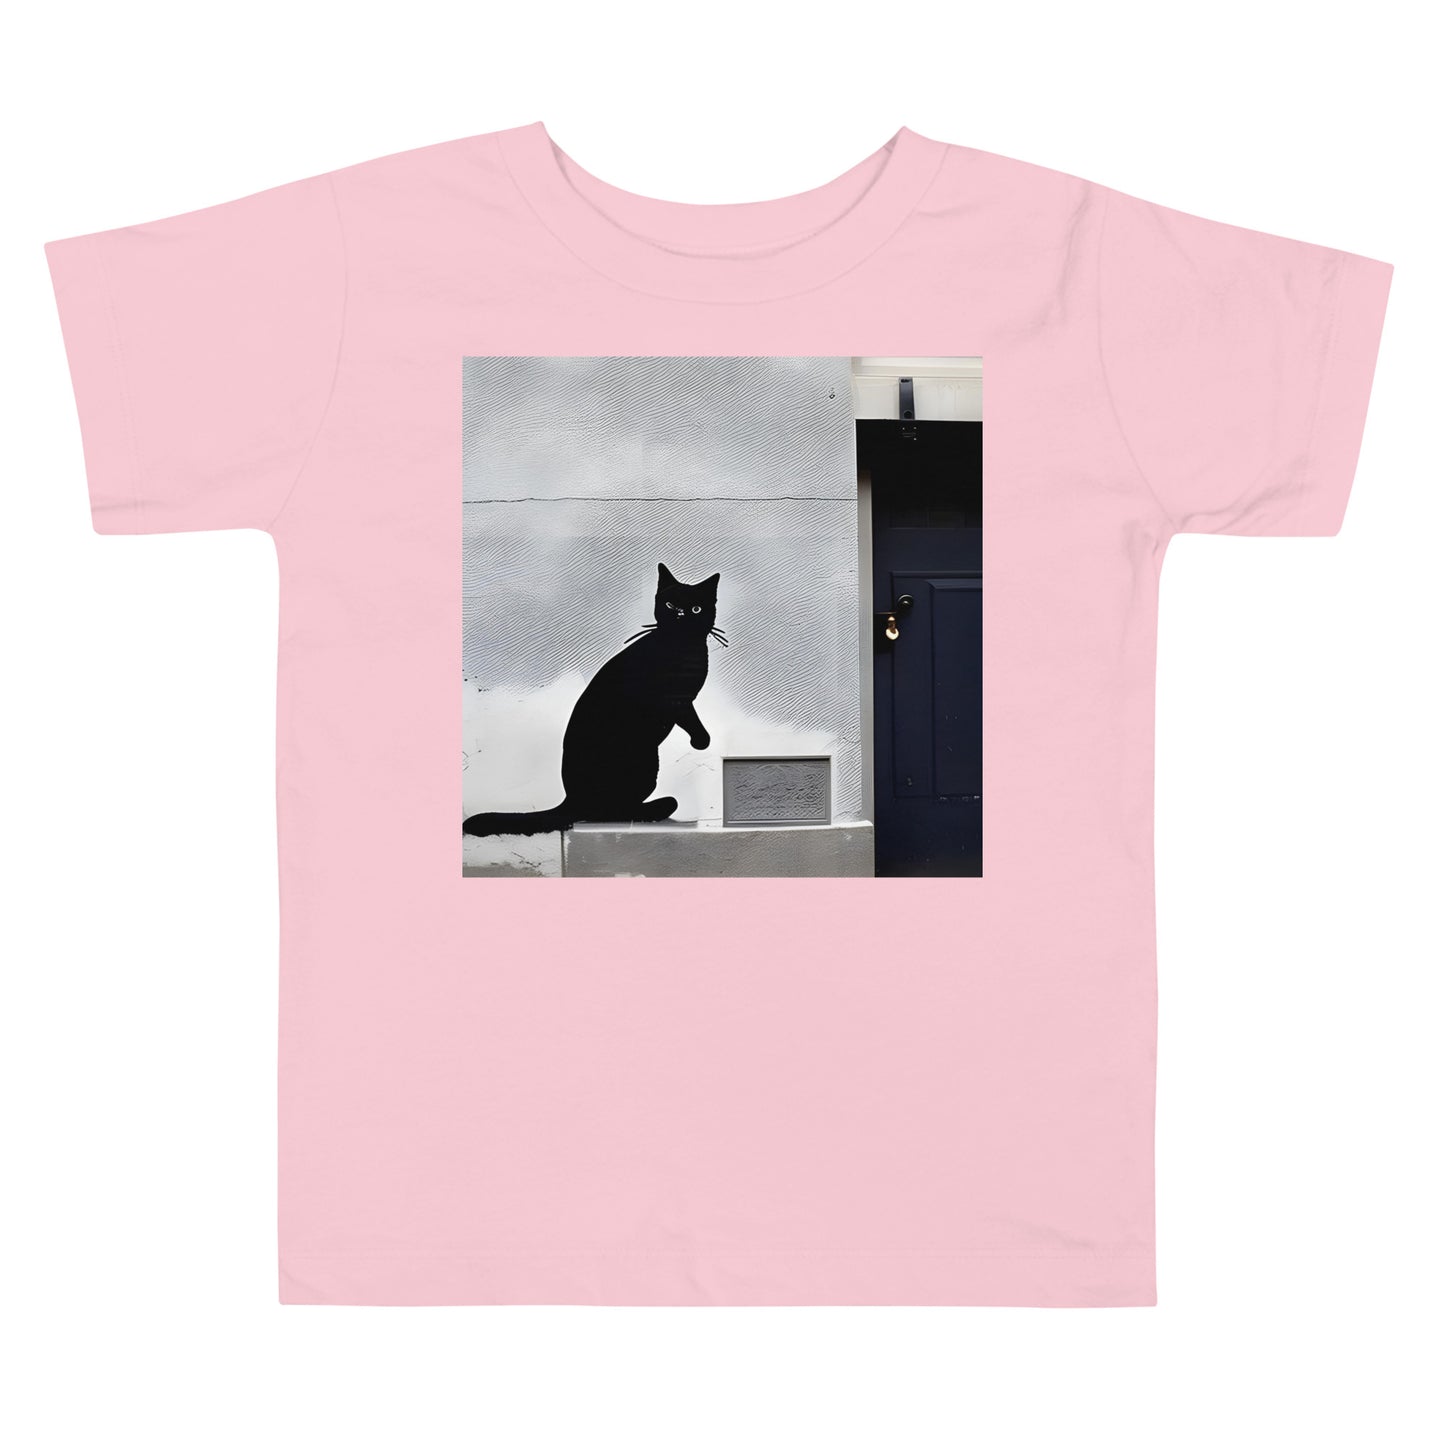 Purradise Toddler's T-Shirt - 044